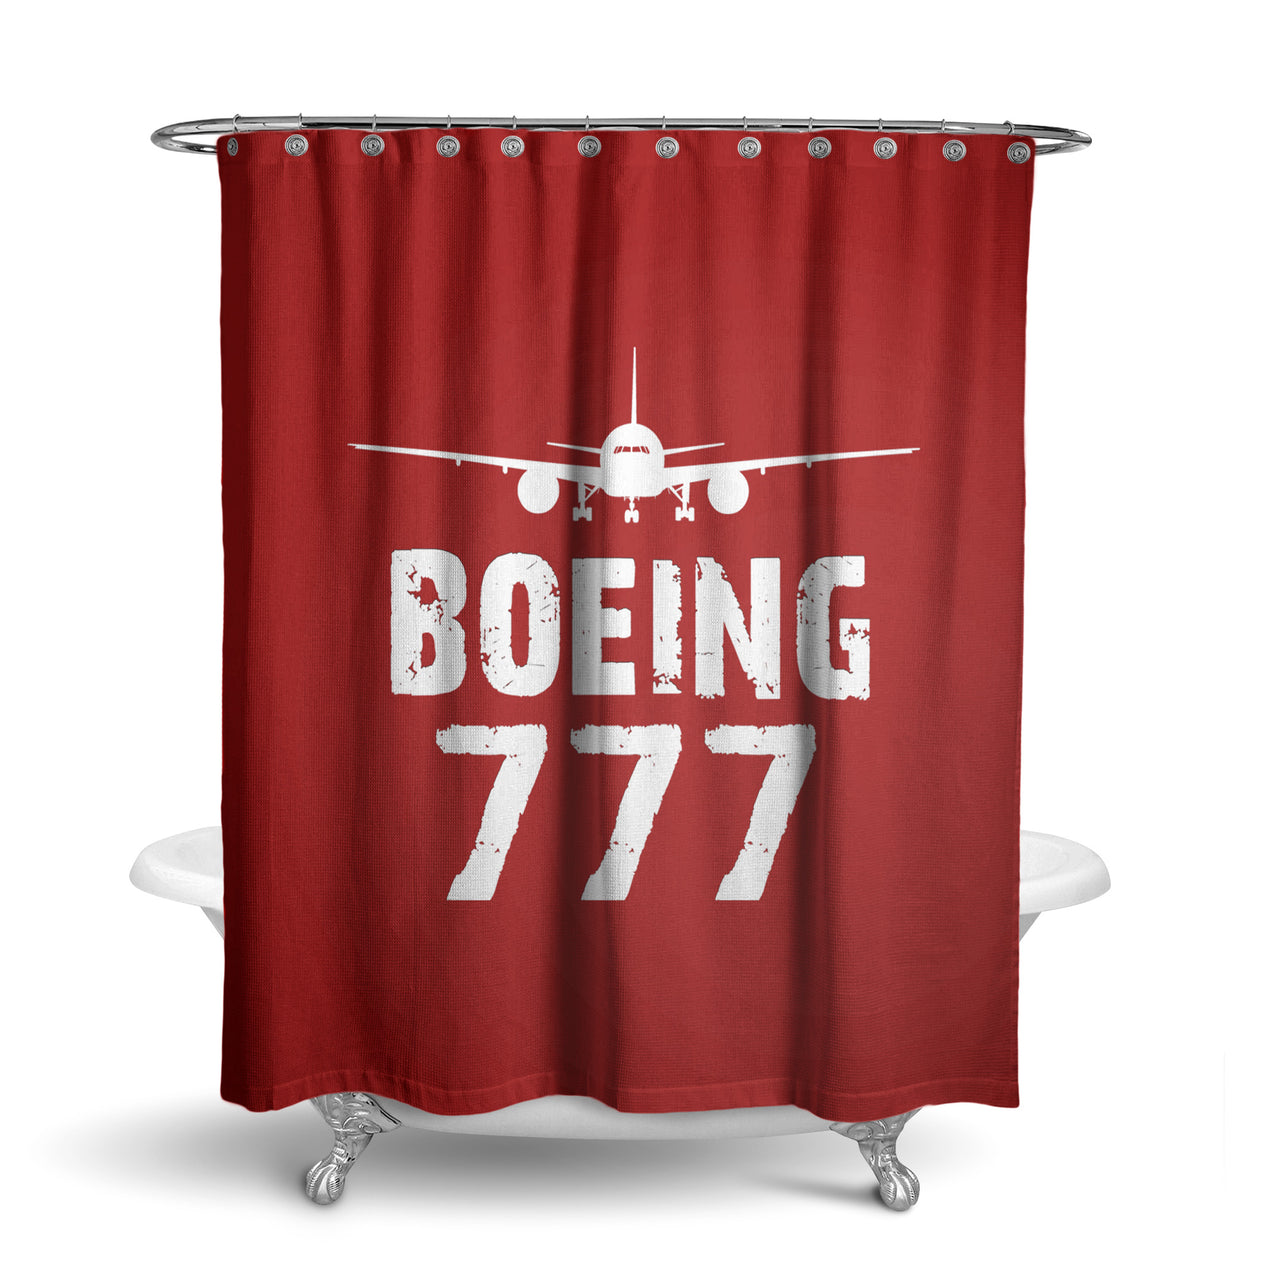 Boeing 777 & Plane Designed Shower Curtains